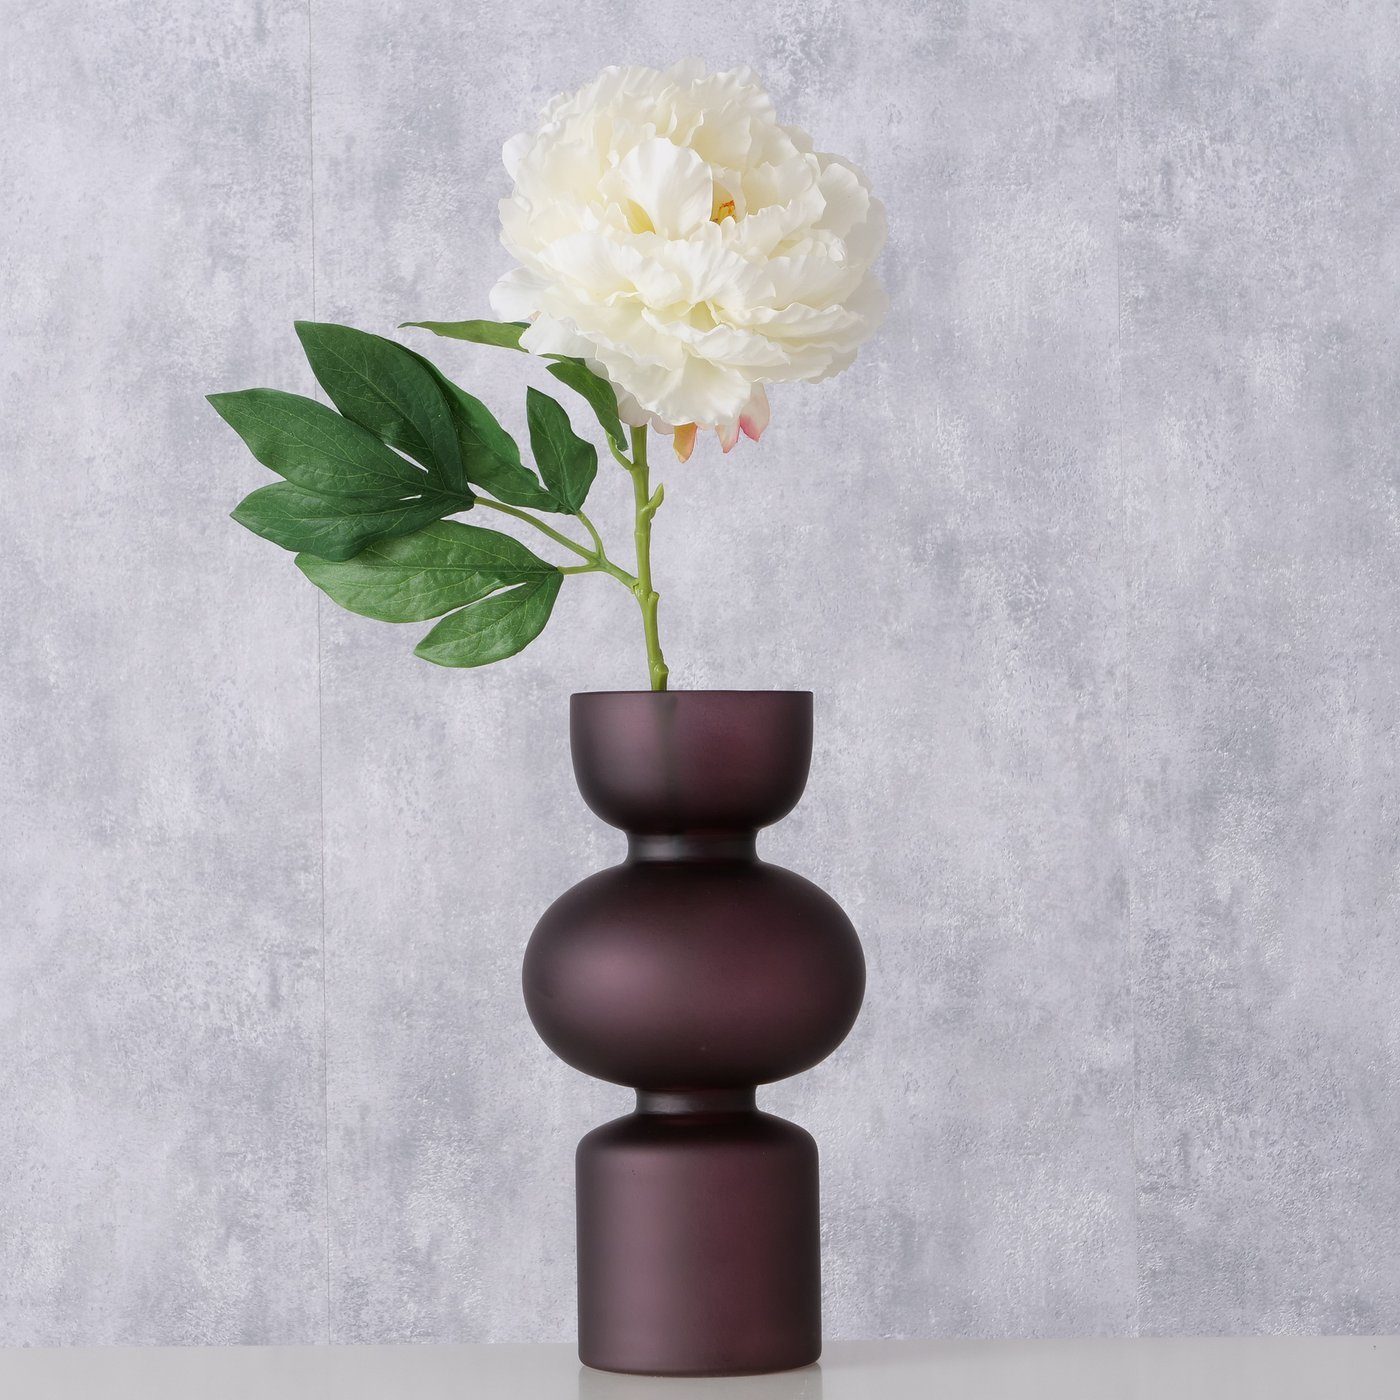 BOLTZE Dekovase "Nelika" aus Glas in lila, Vase Blumenvase